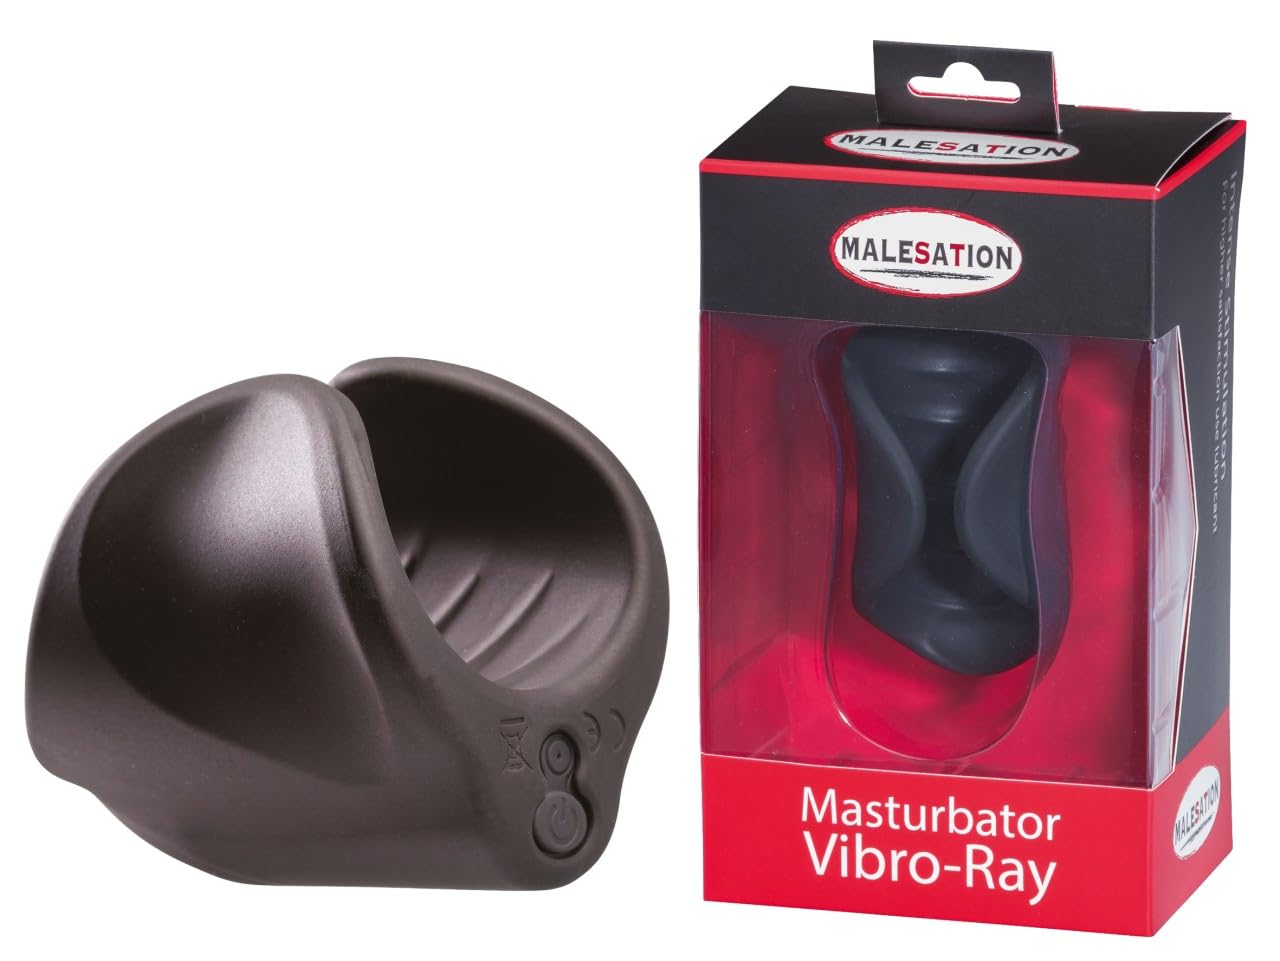 Malesation Automatischer Masturbator Cup Vibro-Ray